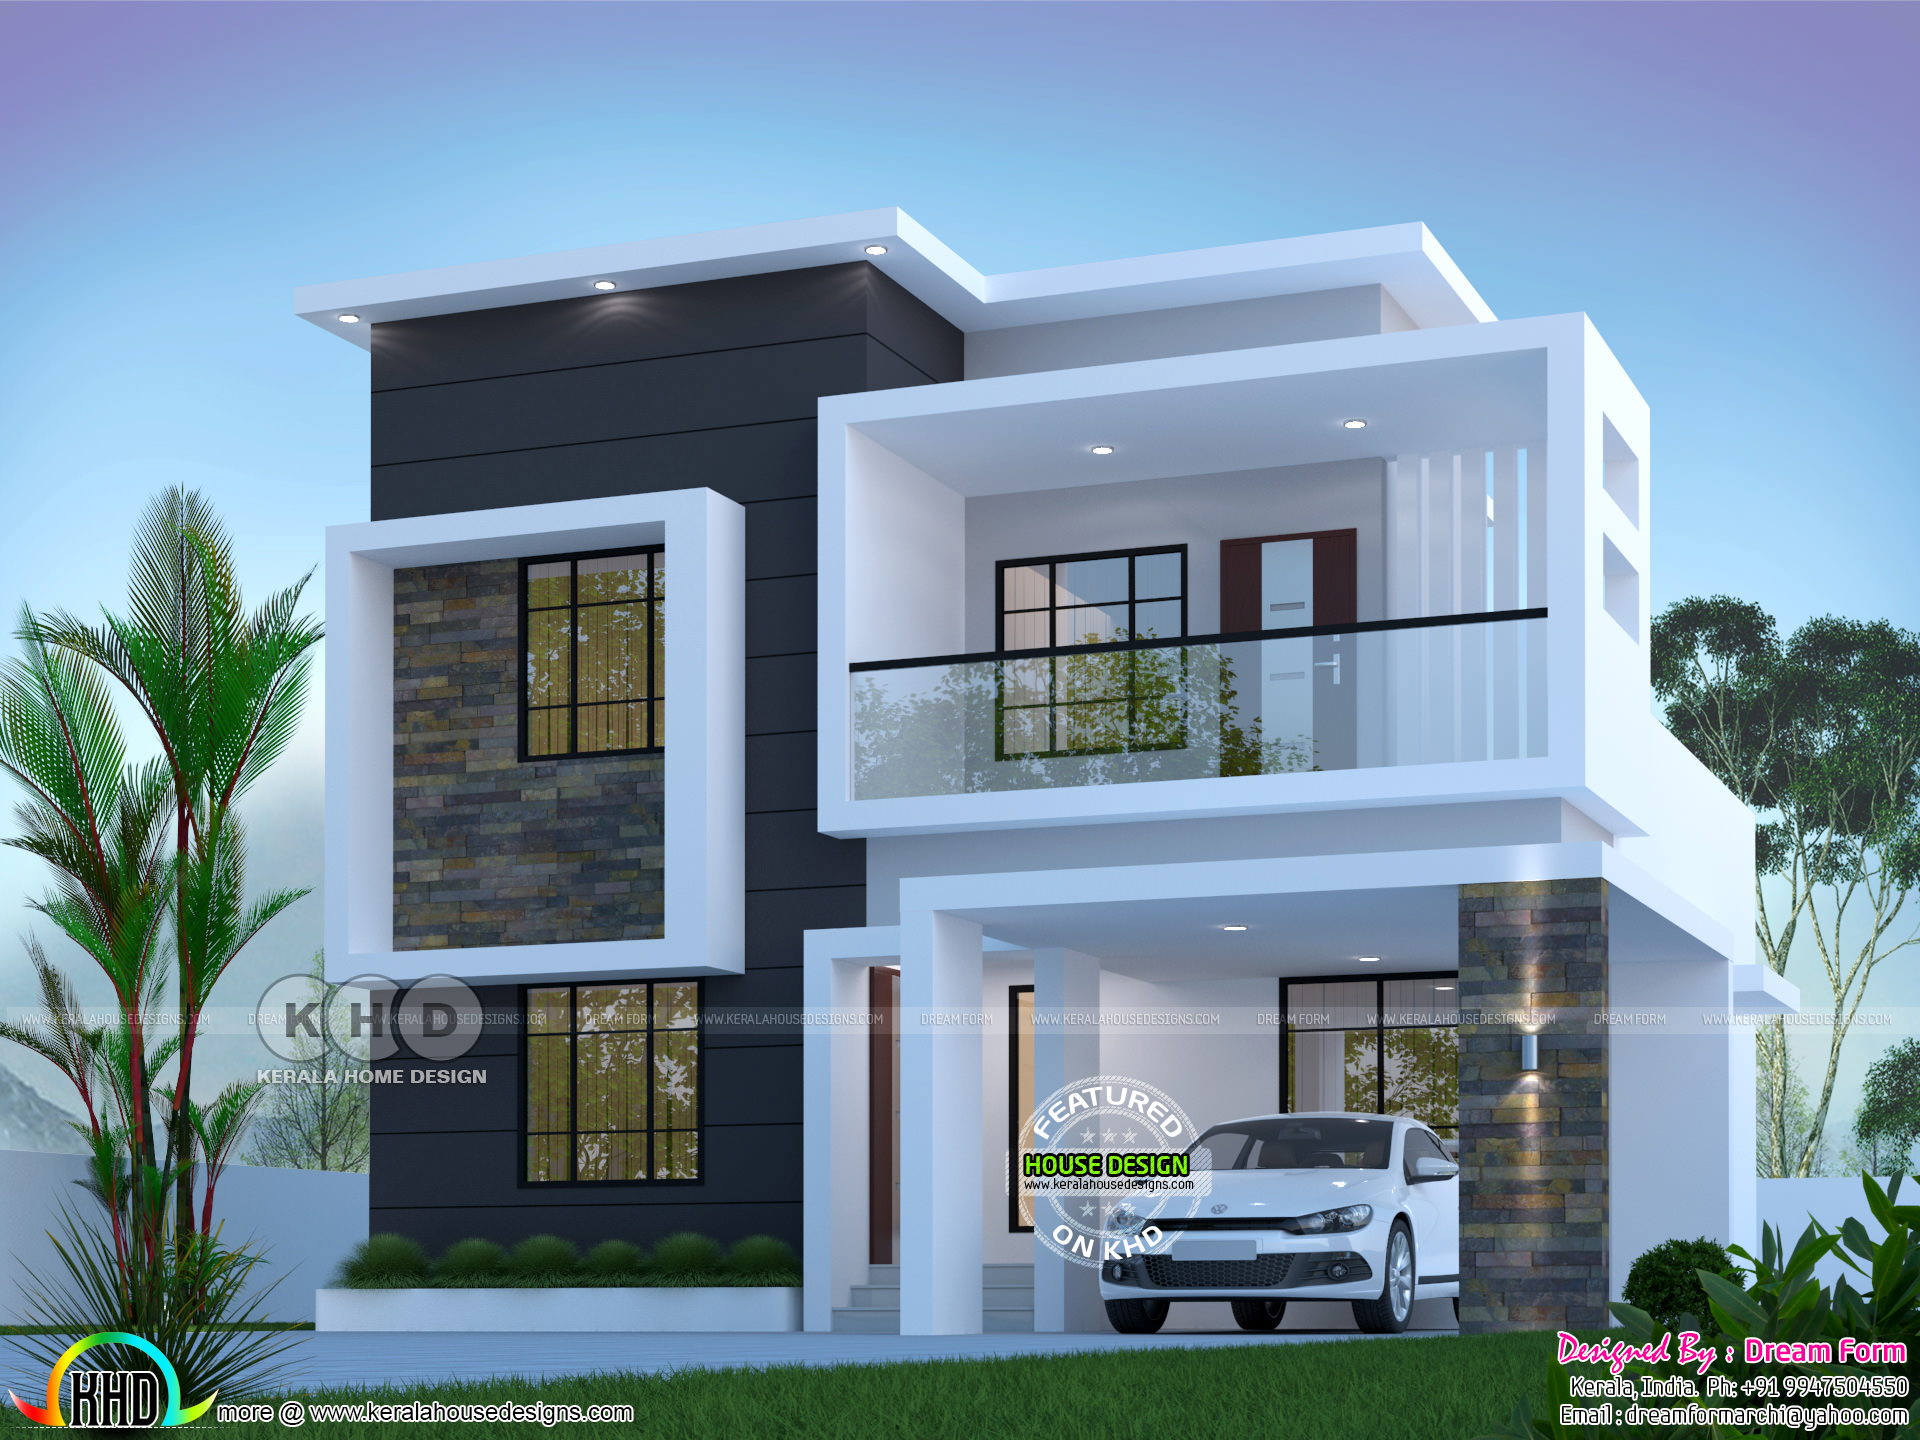 3 bedroom 1800  sq  ft  modern  home  design  Kerala home  